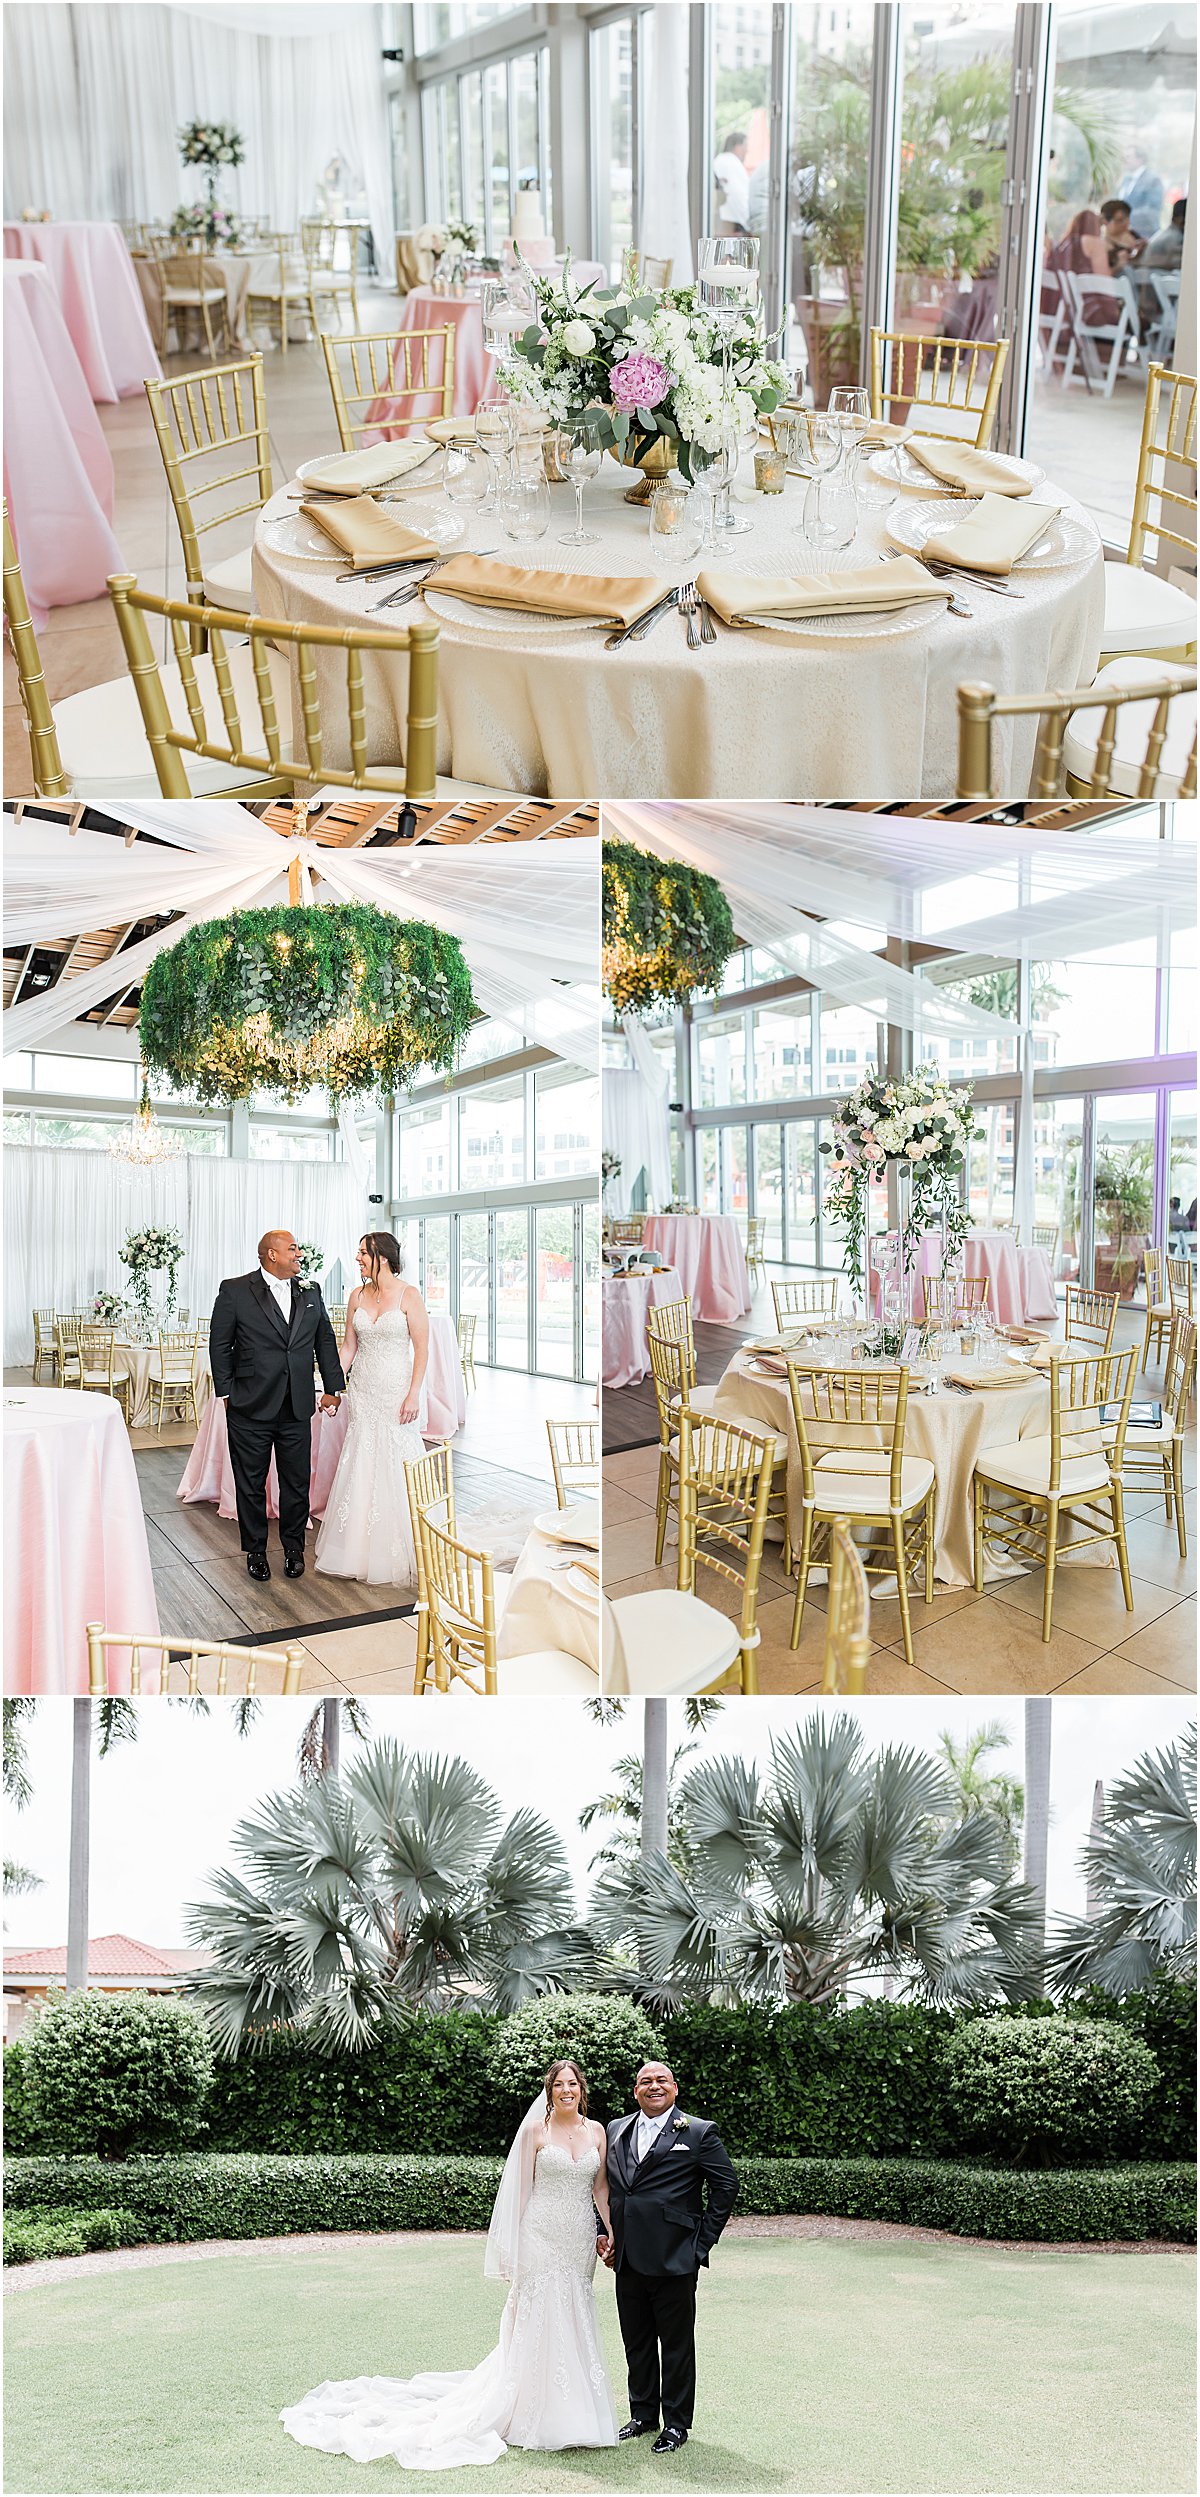 West Palm Beach Lake Pavilion | Top Palm Beach Wedding Venue | Married in Palm Beach | www.marriedinpalmbeach.com | Blink & Co Photography